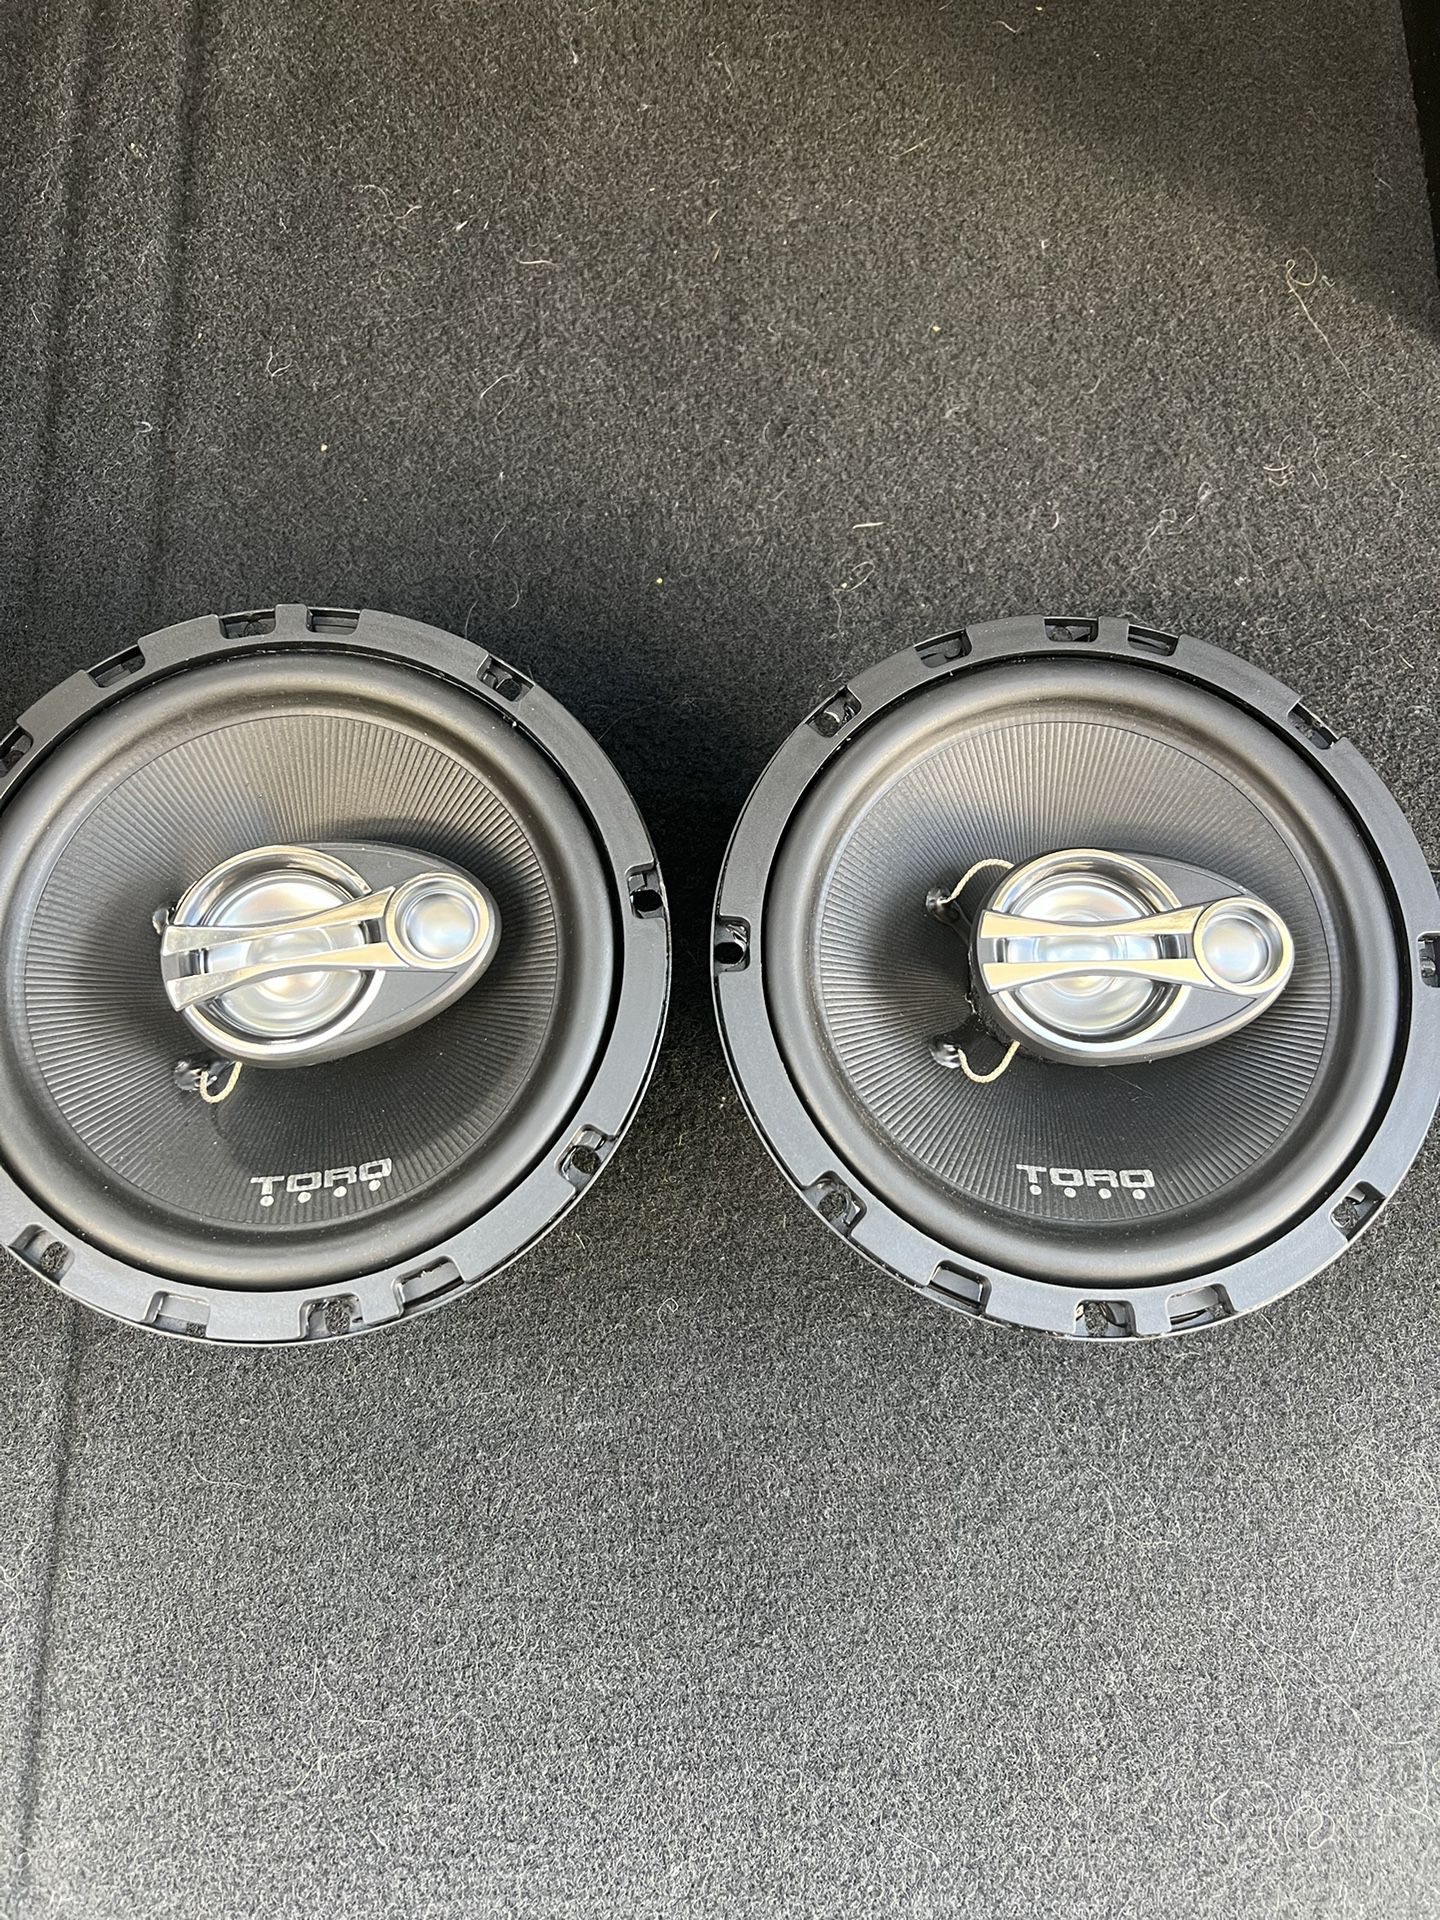 Toro Audio 6.5 Speakers